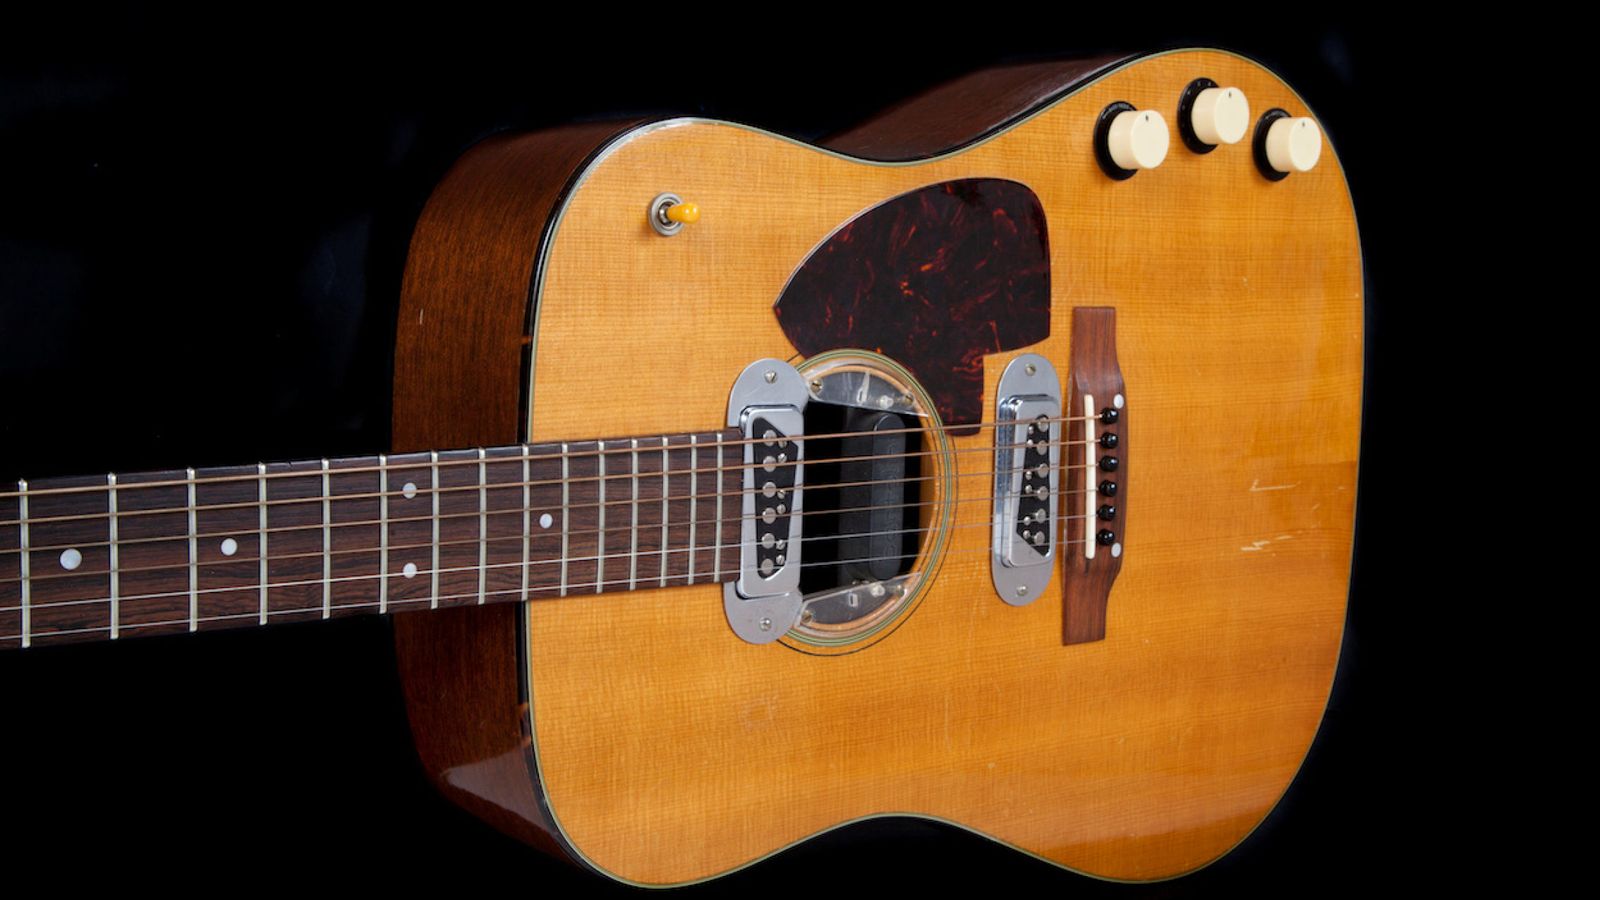 Música: La guitarra que usó Kurt Cobain antes de morir, subastada por 5,3 millones de euros